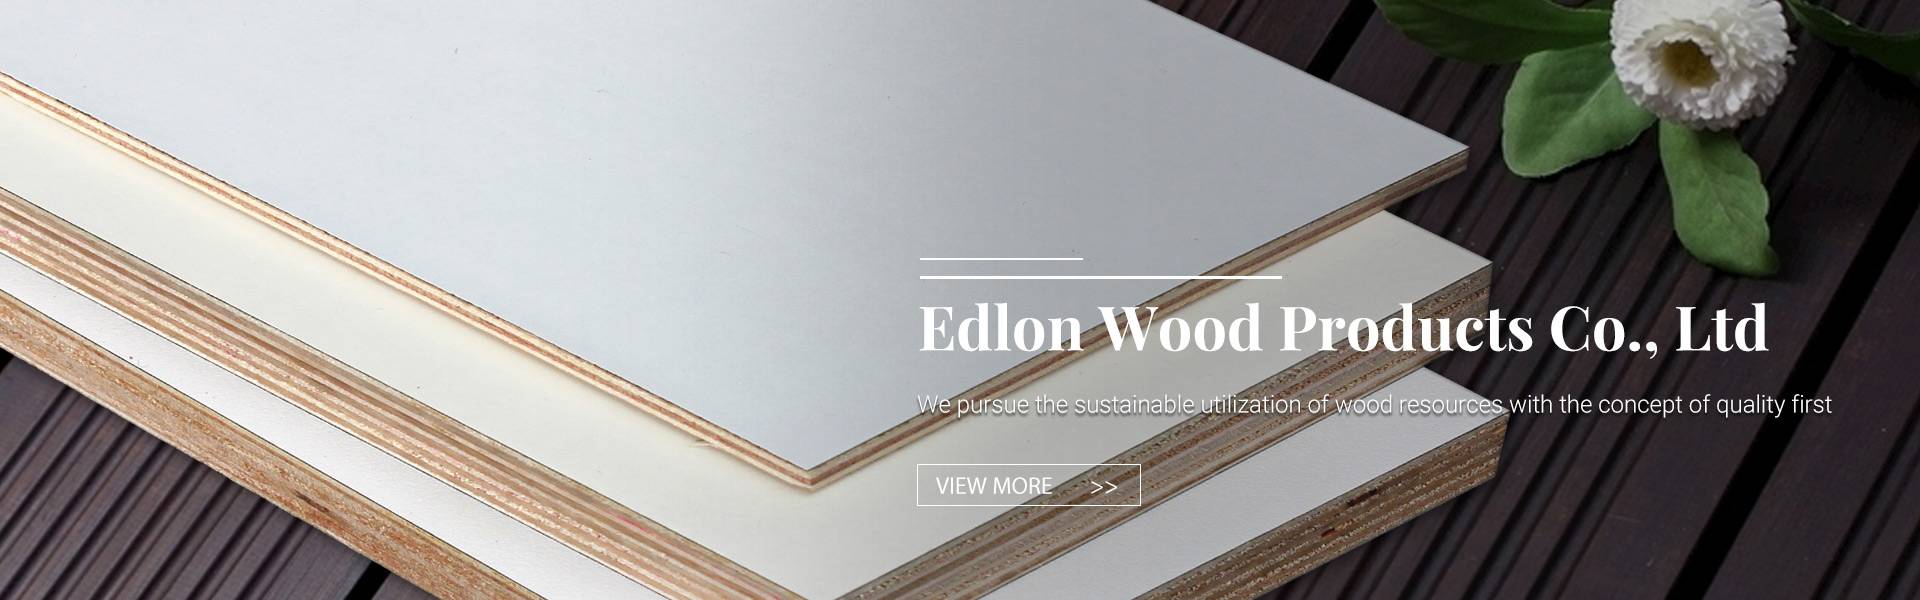 Edlon Wood Products Co, Ltd